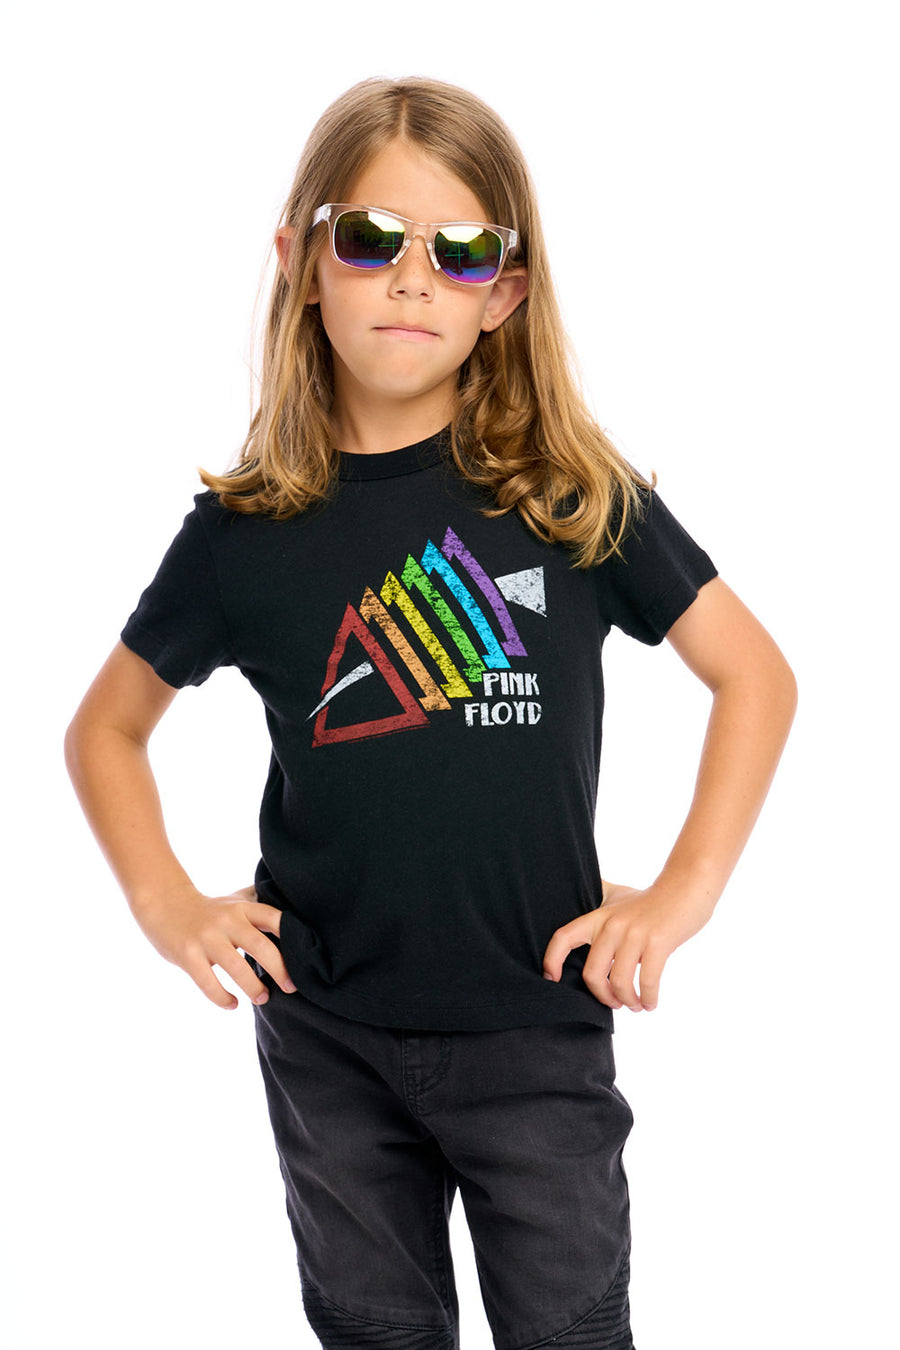 Pink Floyd - Rainbow 3D Logo Boys chaserbrand